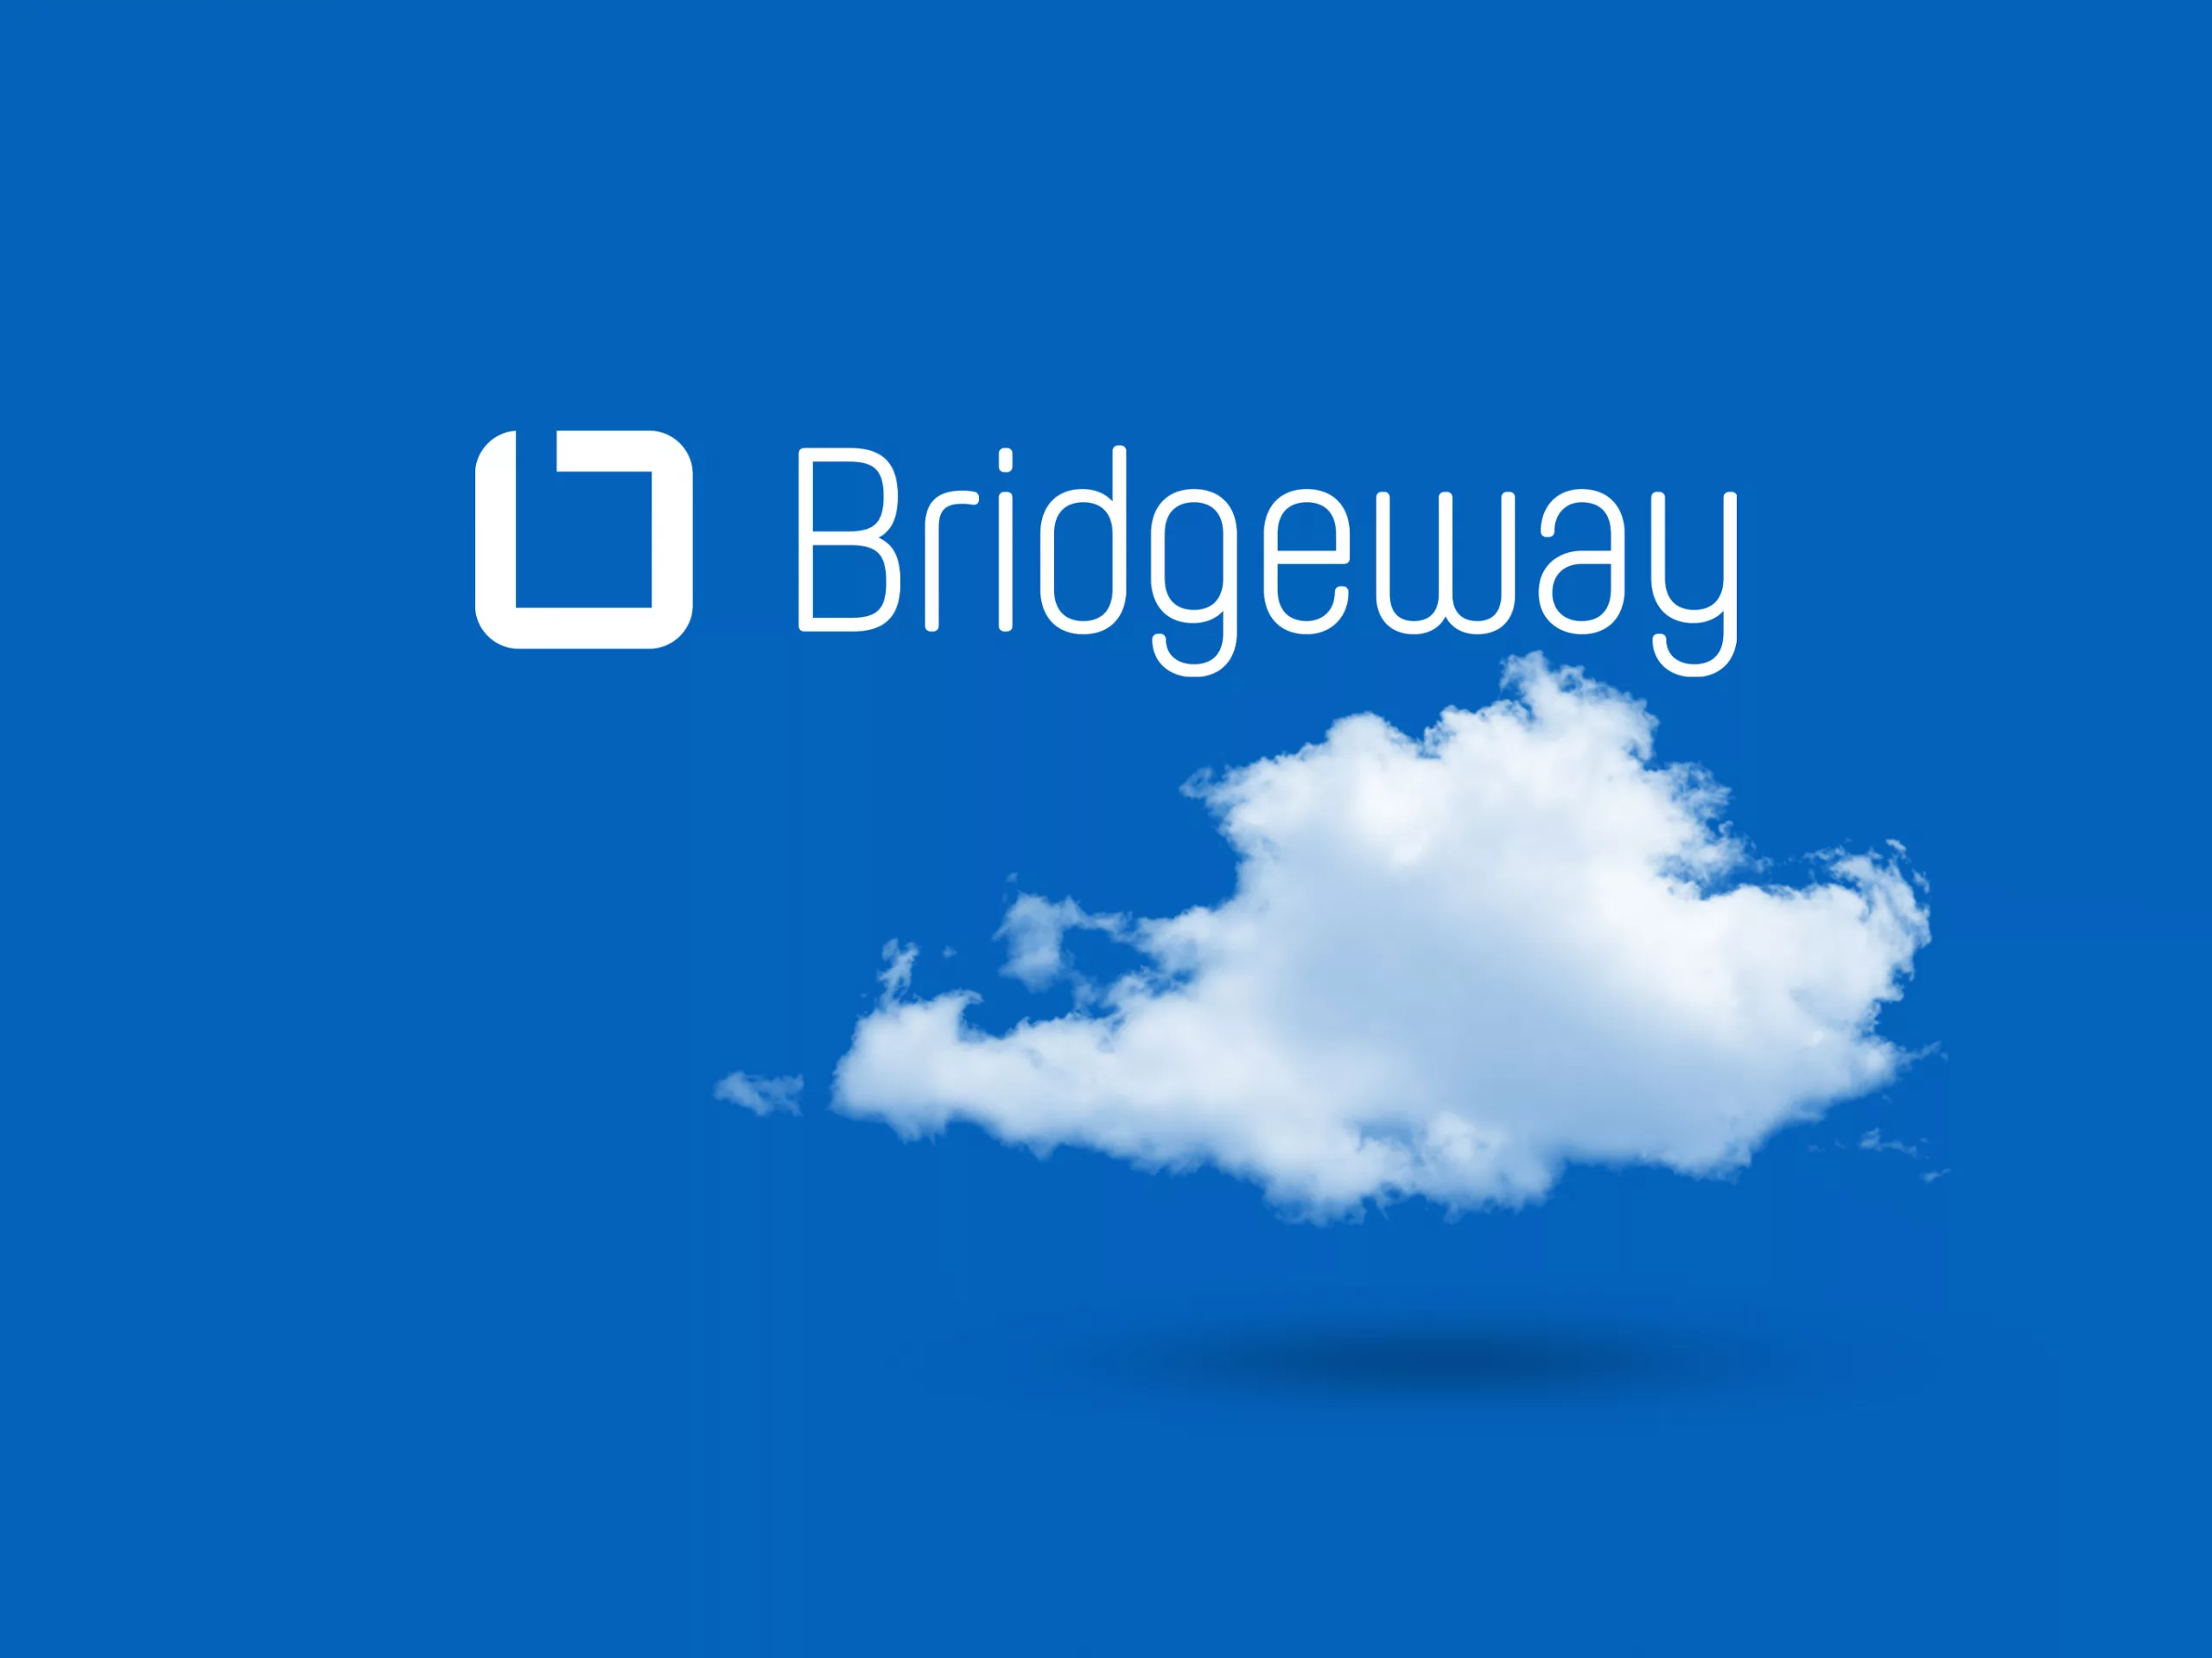 Brand identity for Bridgeway by Peek Creative Limited